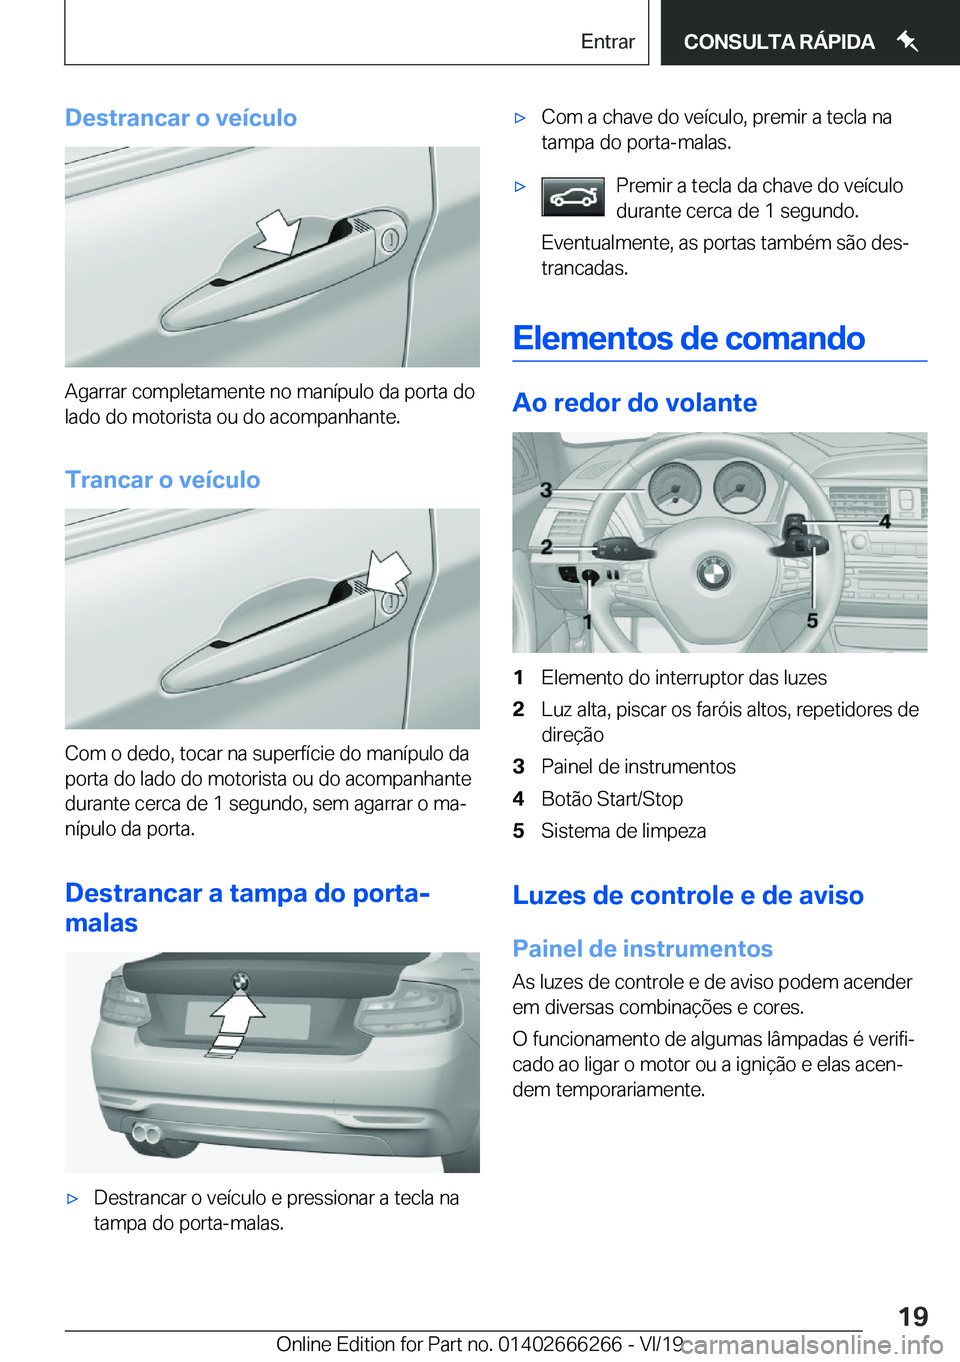 BMW 2 SERIES COUPE 2020  Manual do condutor (in Portuguese) �D�e�s�t�r�a�n�c�a�r��o��v�e�